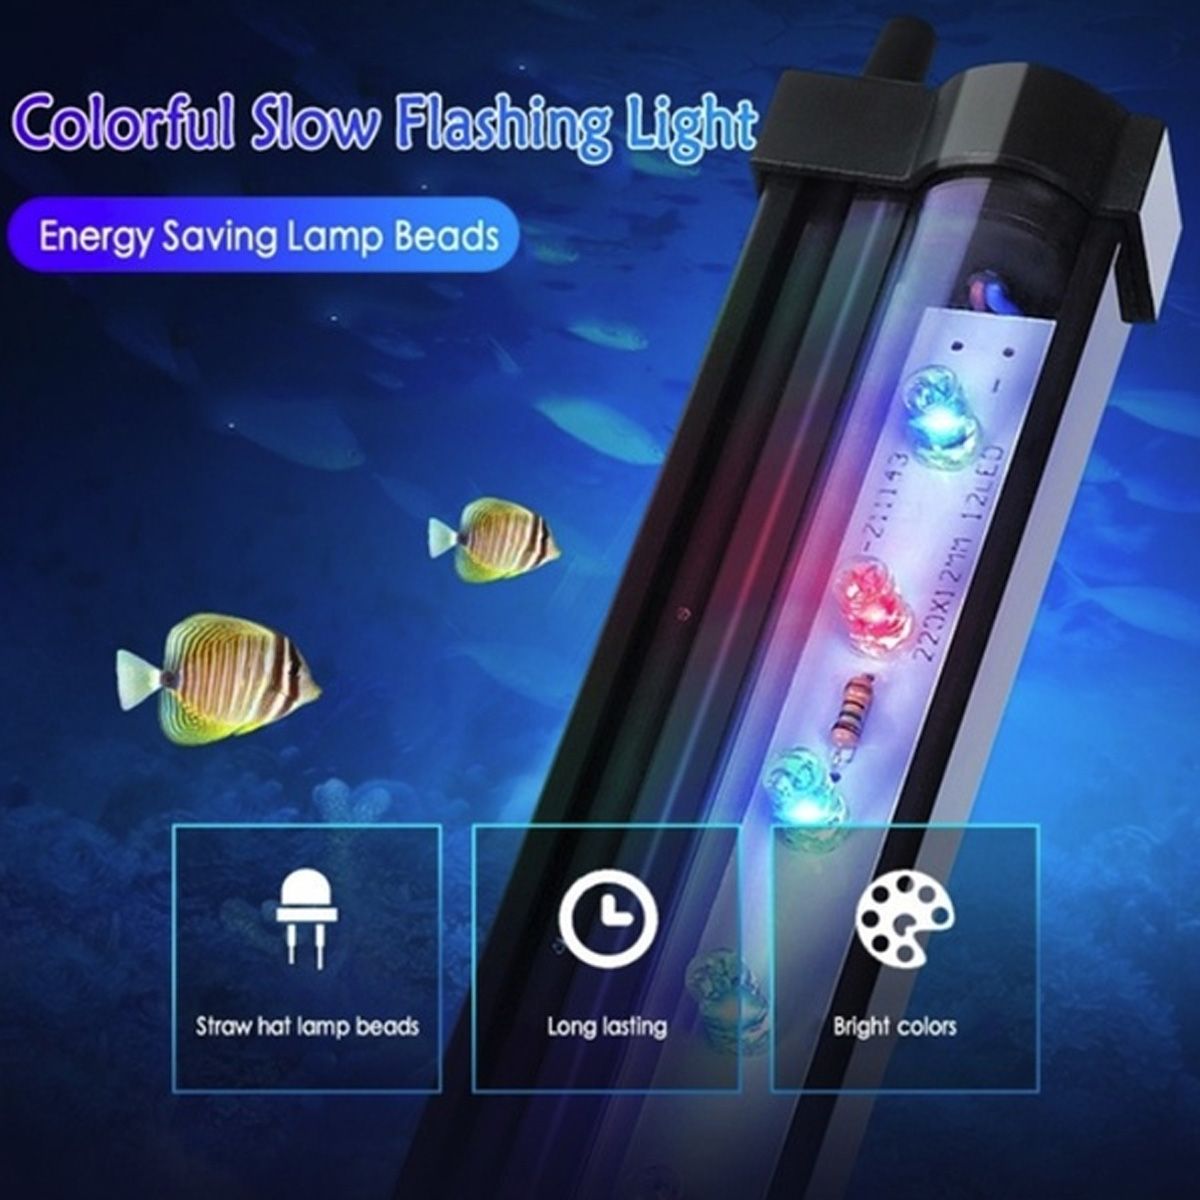 Aquarium-Multicolor-Fish-Tank-LED-Lights-Underwater-Waterproof-Lamp-1766461